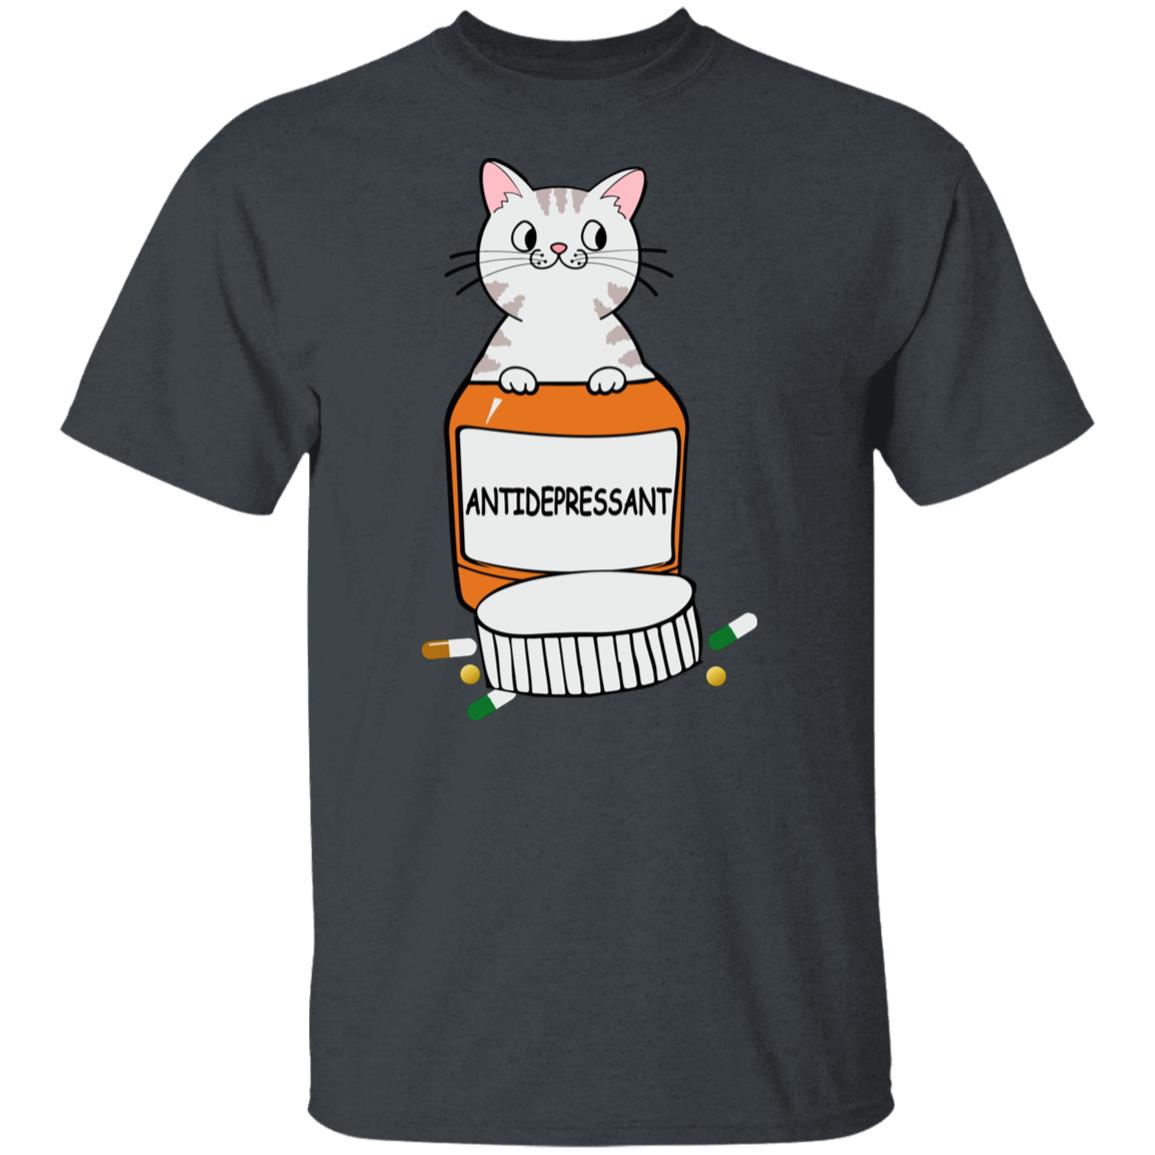 Anti-depressant cat tshirt